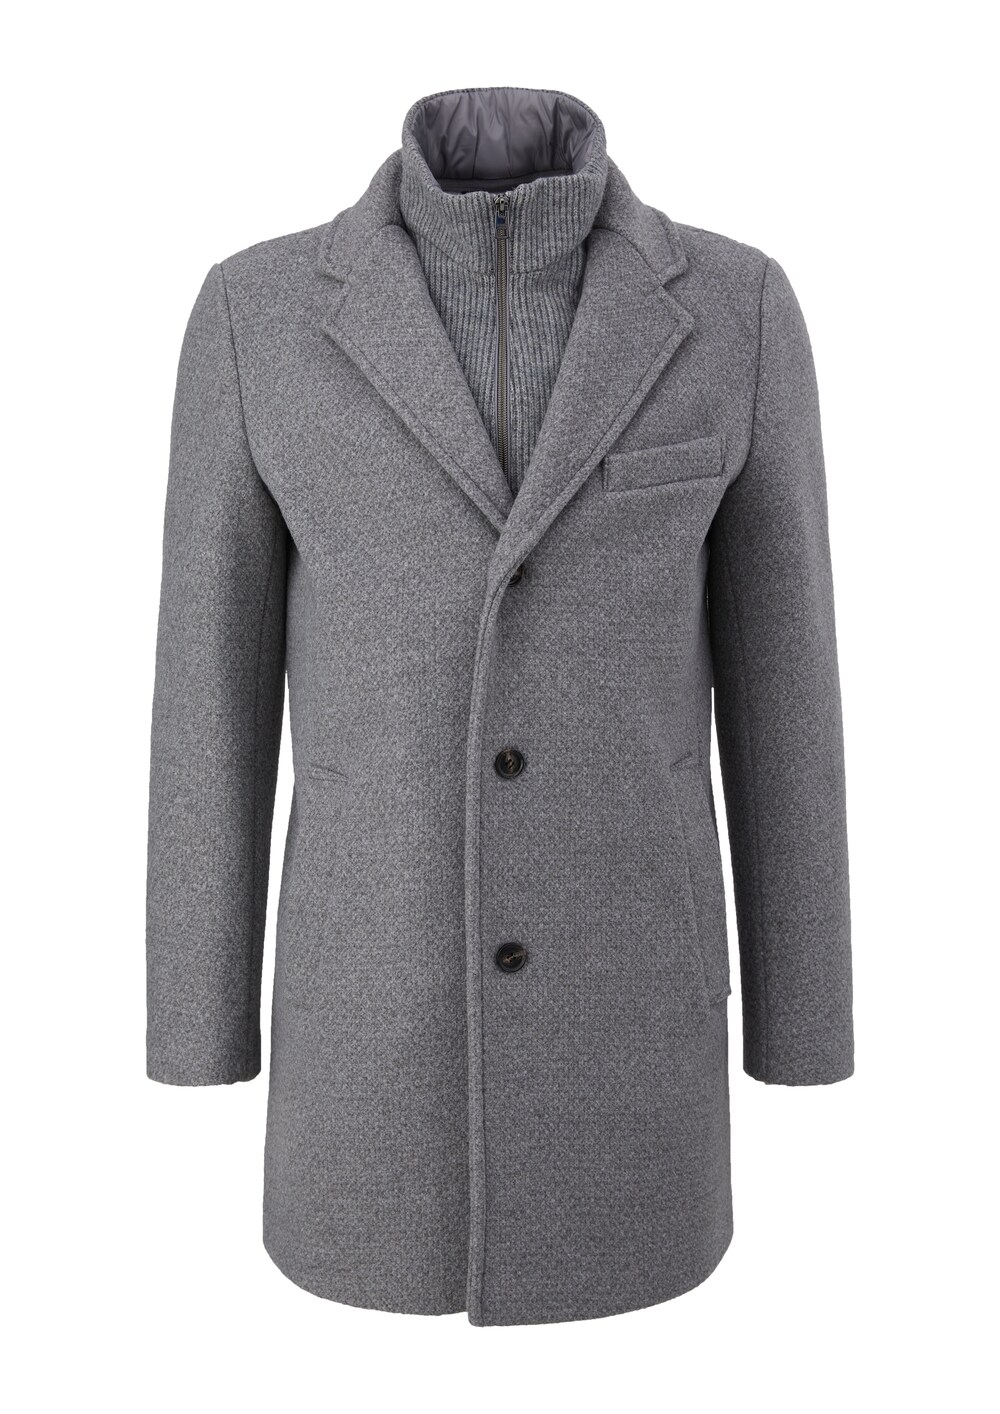 Межсезонное пальто S.Oliver, пестрый серый межсезонное пальто edited tosca пестрый серый